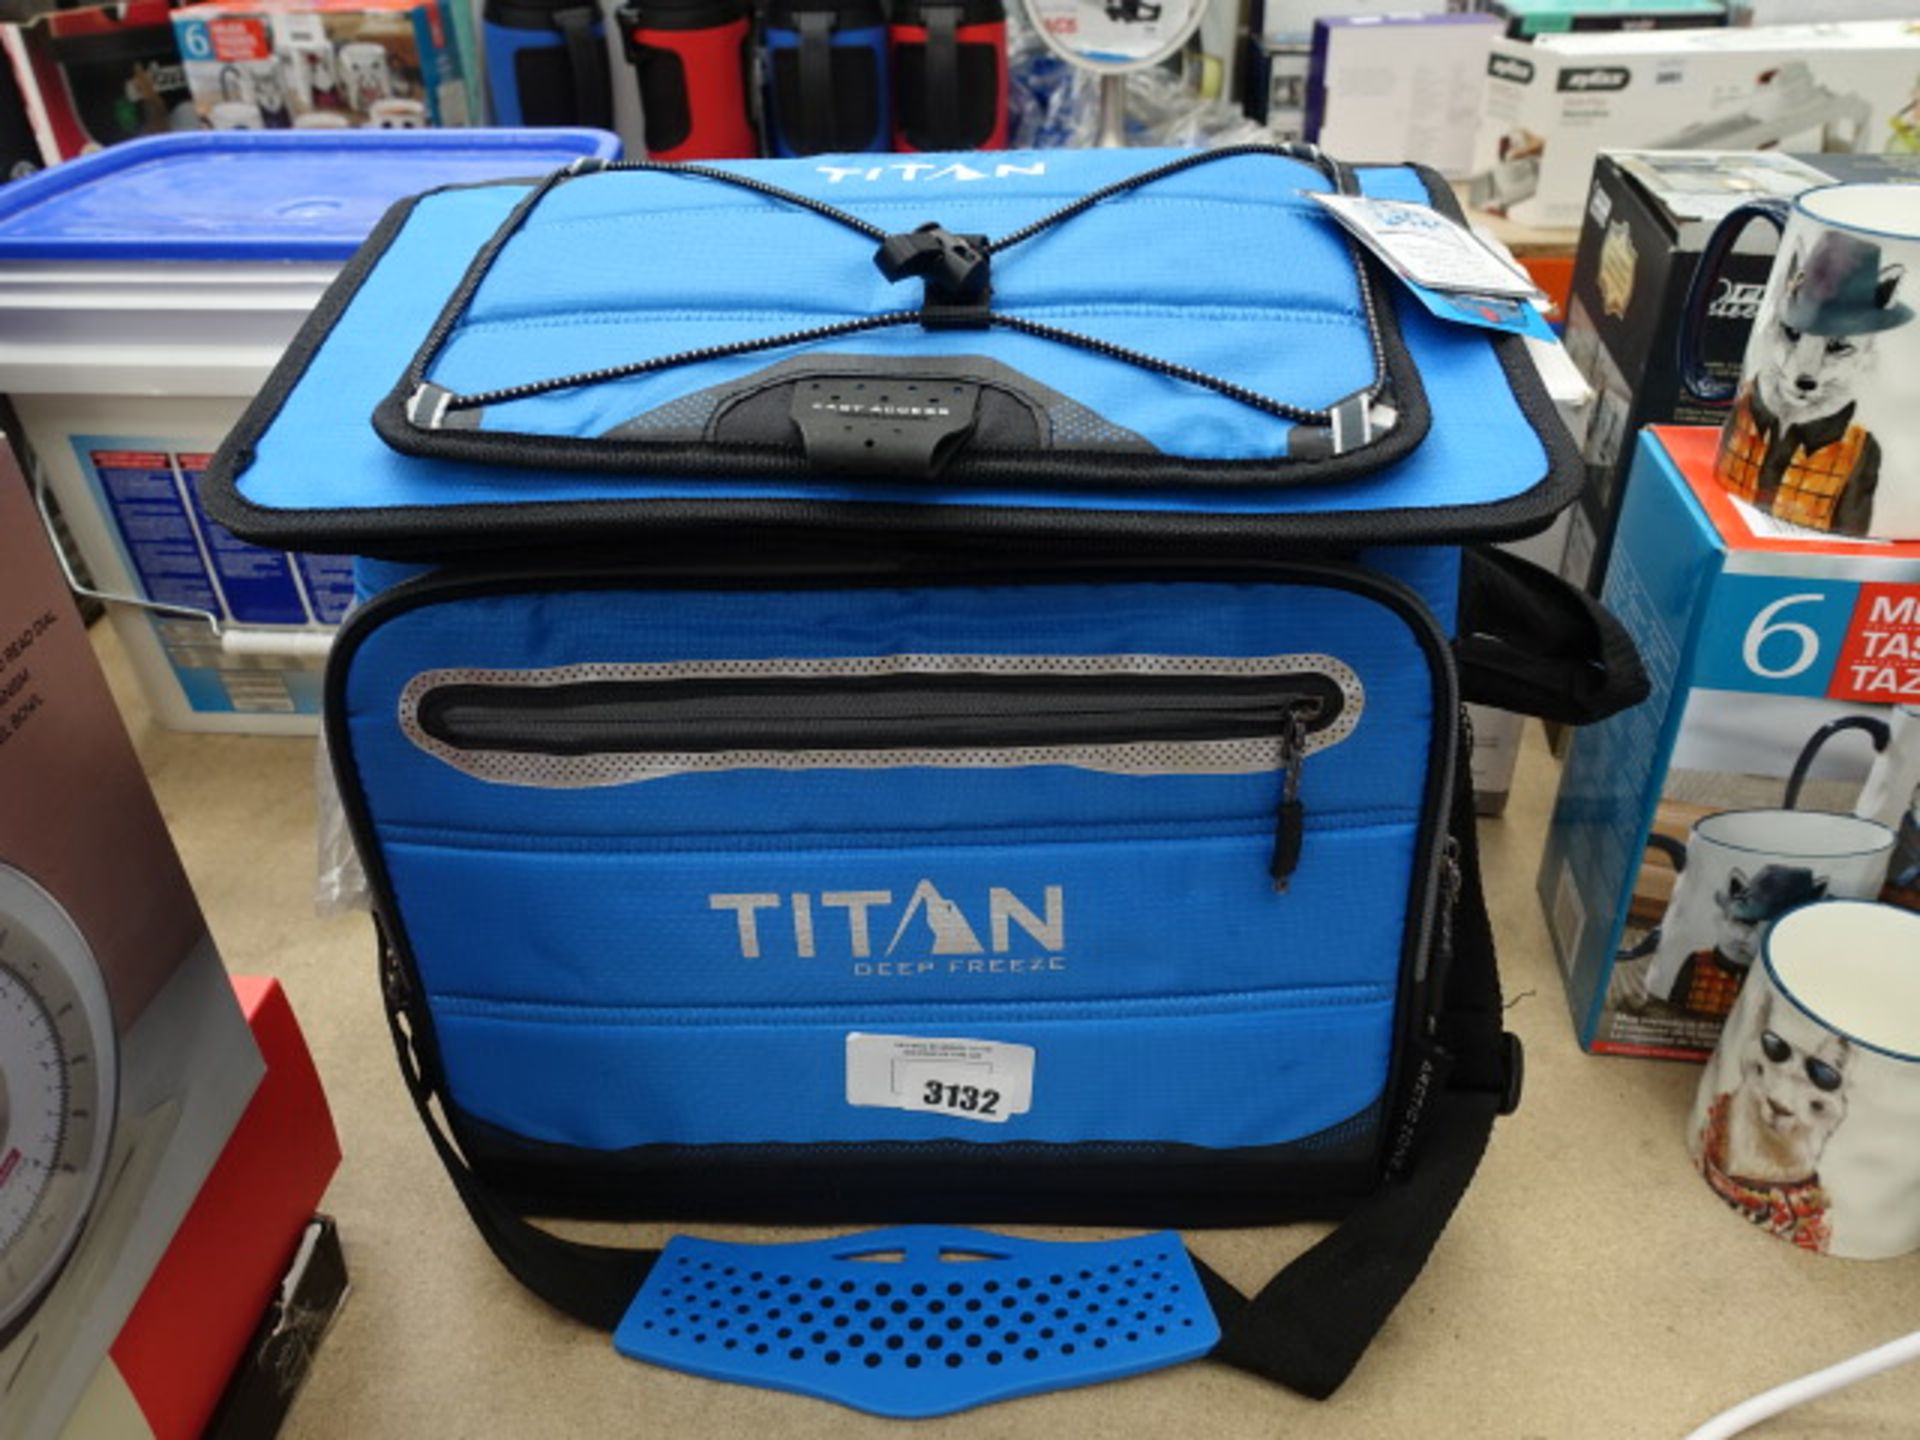 Titan insulated bag